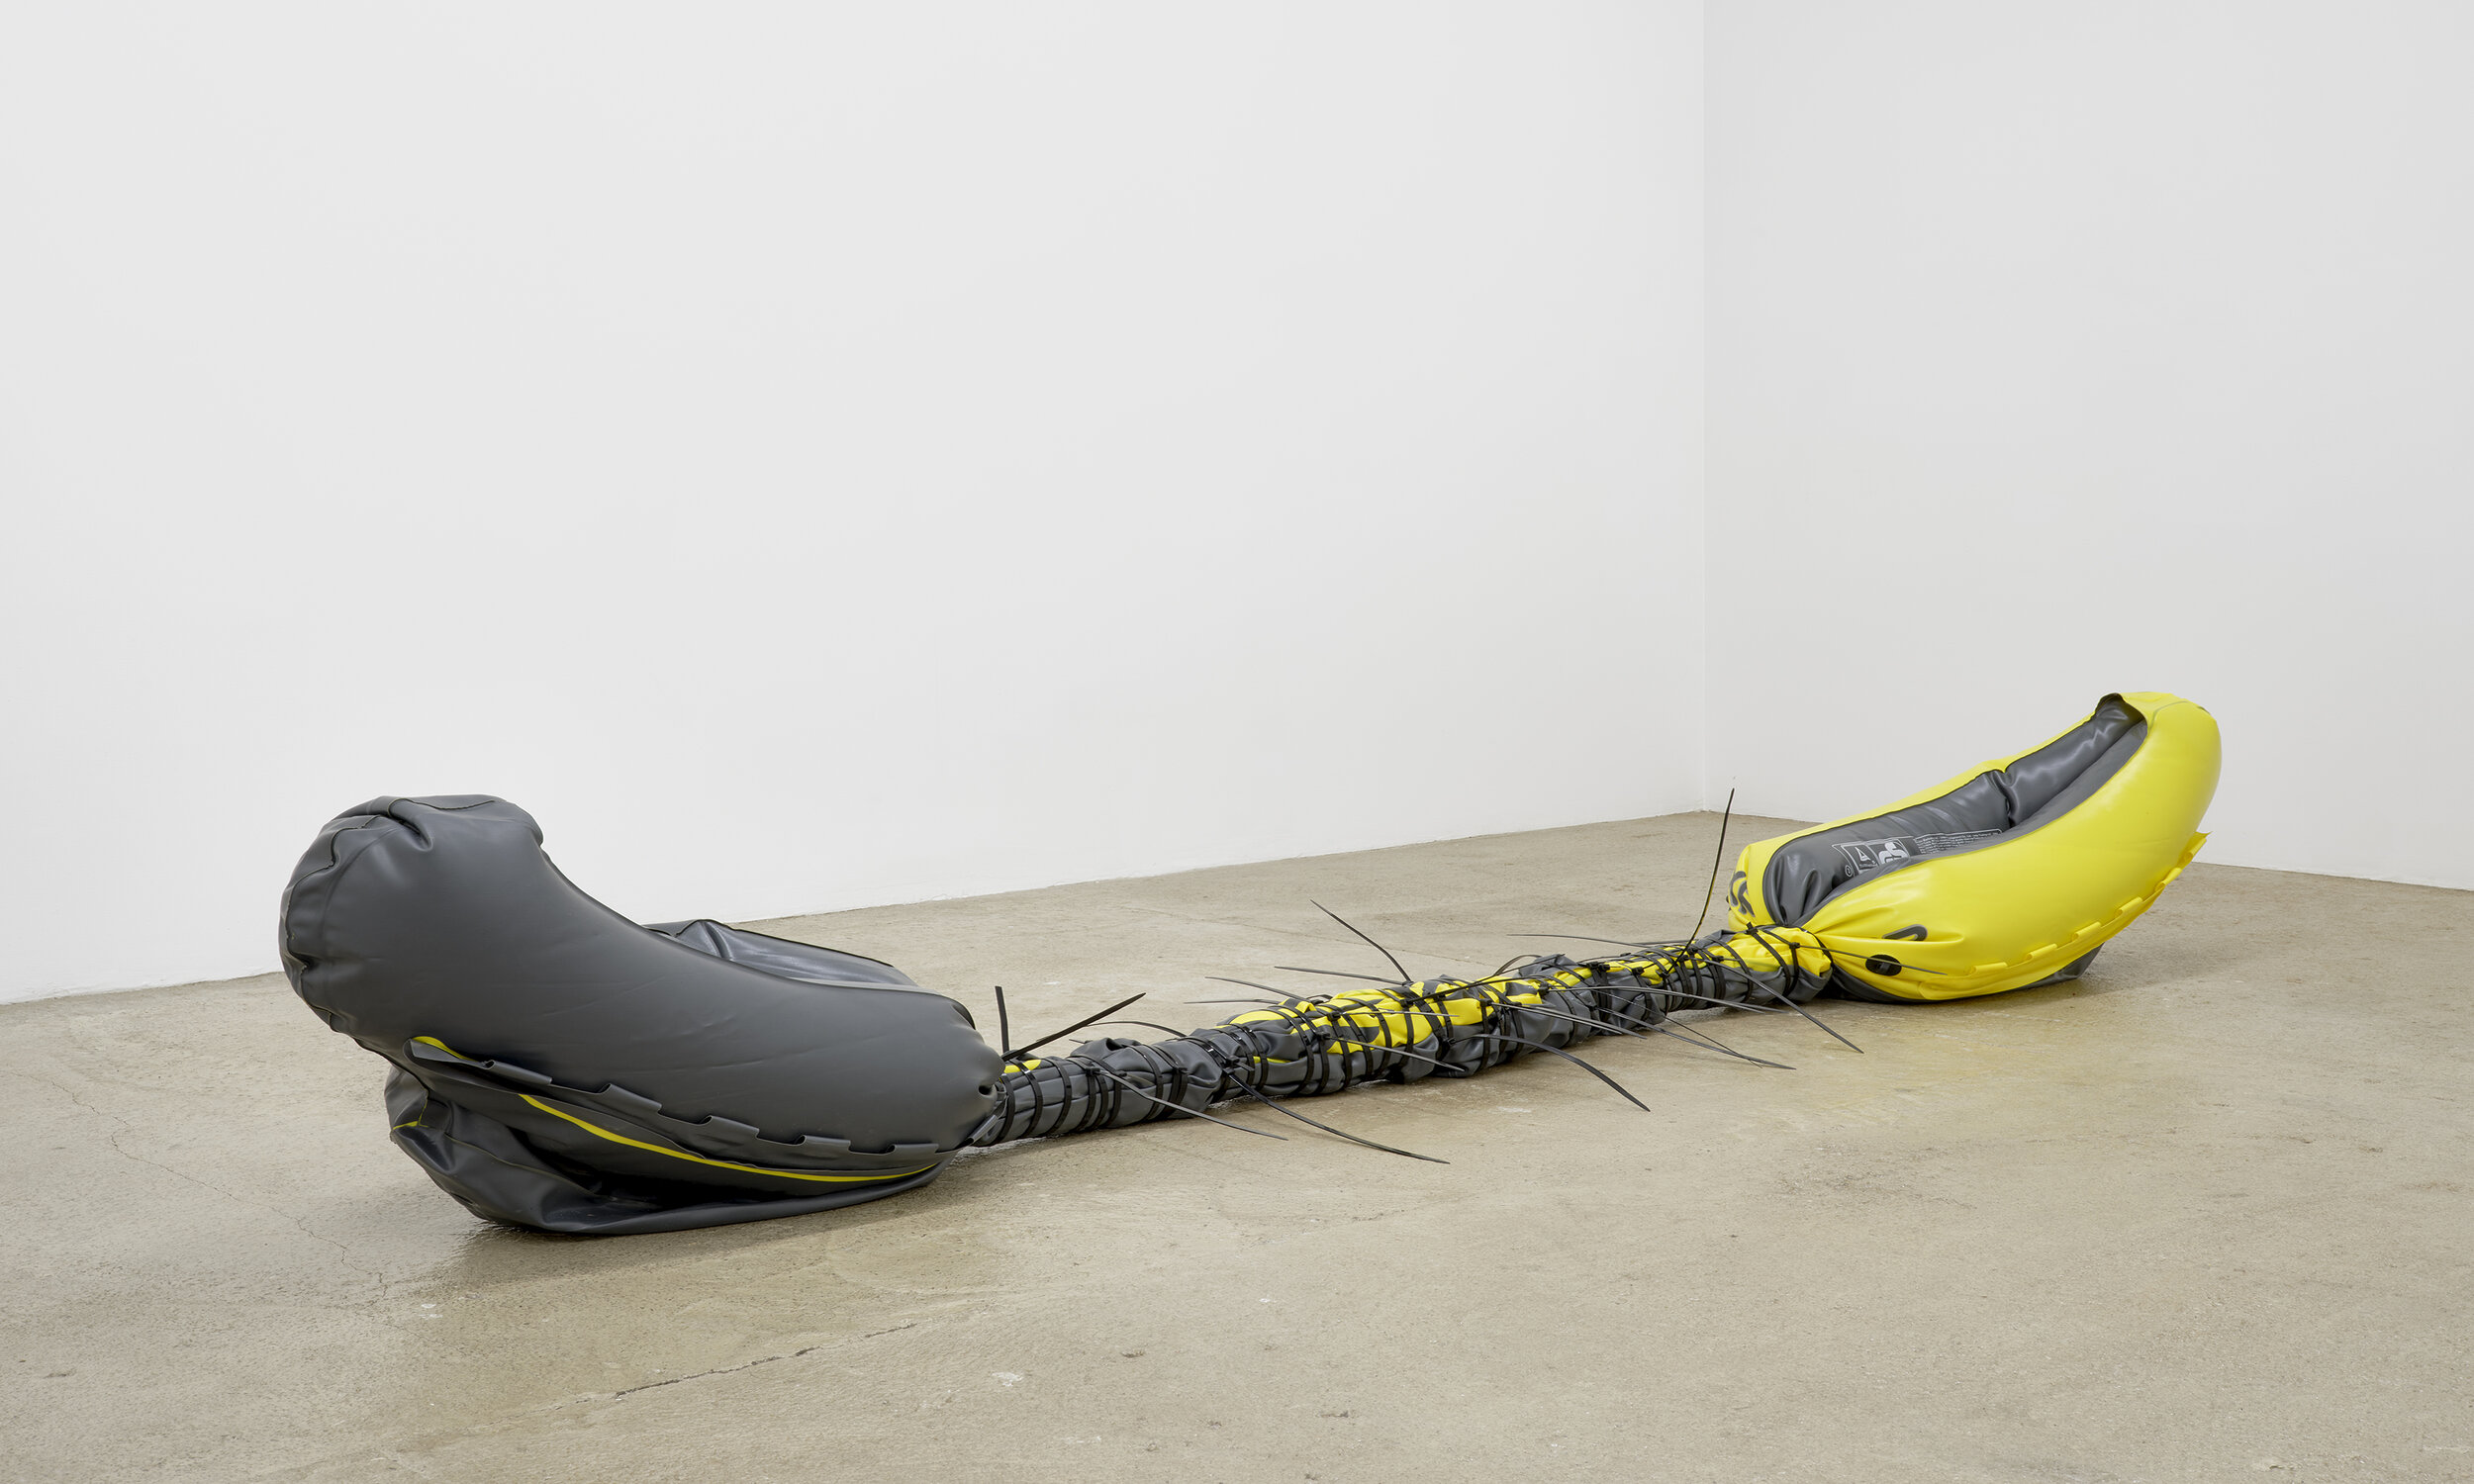  Bat-Ami Rivlin  Untitled (inflatable kayak, zip ties) , 2020  inflatable kayak, cable ties 20 x 18 x 110 inches (51 x 46 x 280 cm)&nbsp; BR6 